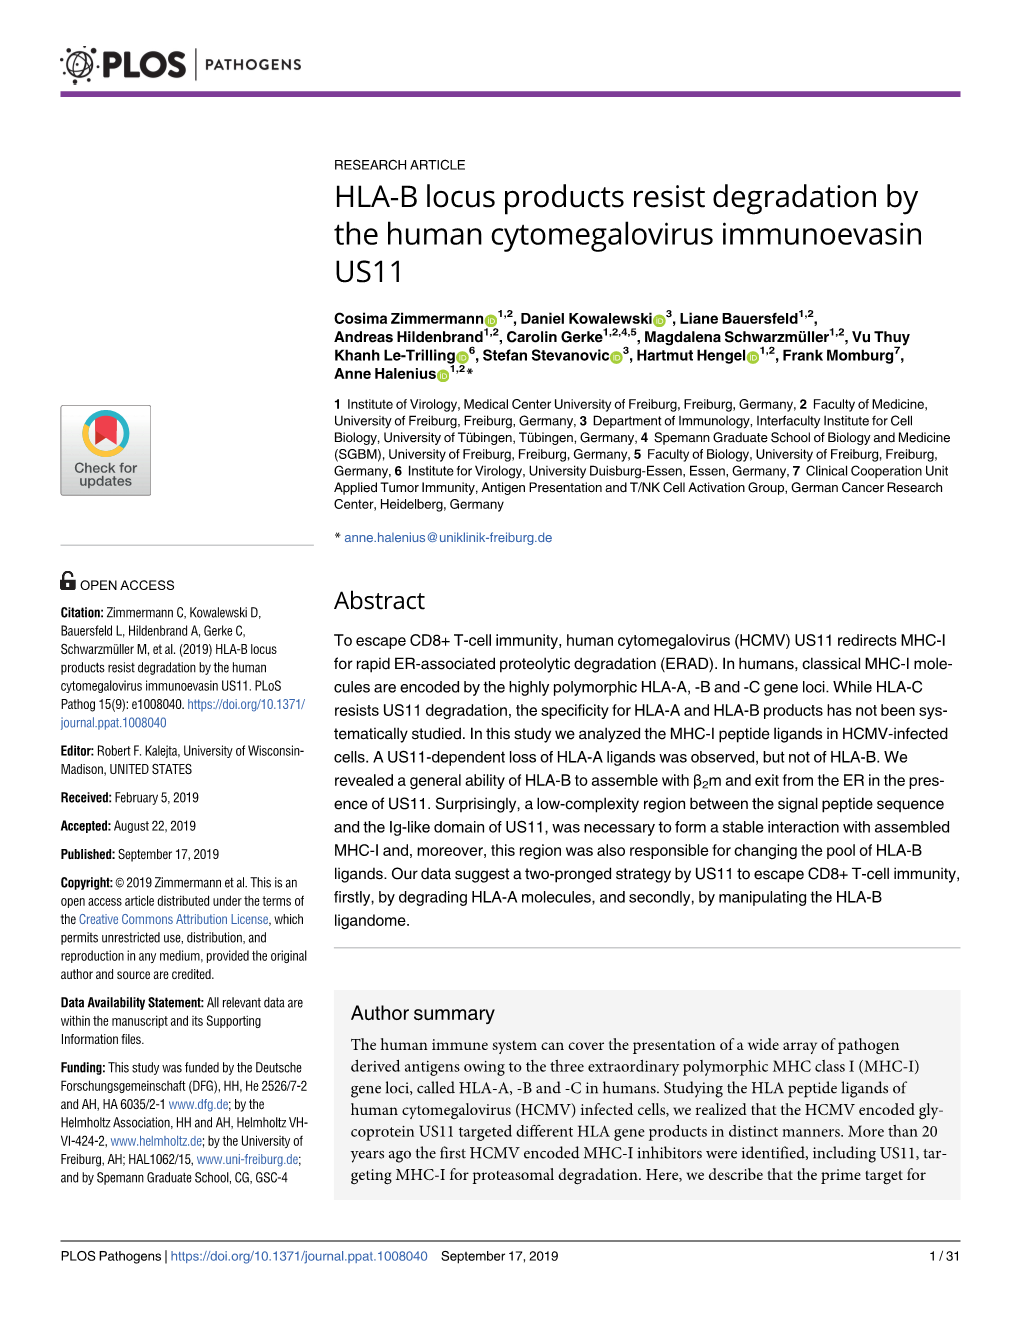 HLA-B Locus Products Resist Degradation by the Human Cytomegalovirus Immunoevasin US11